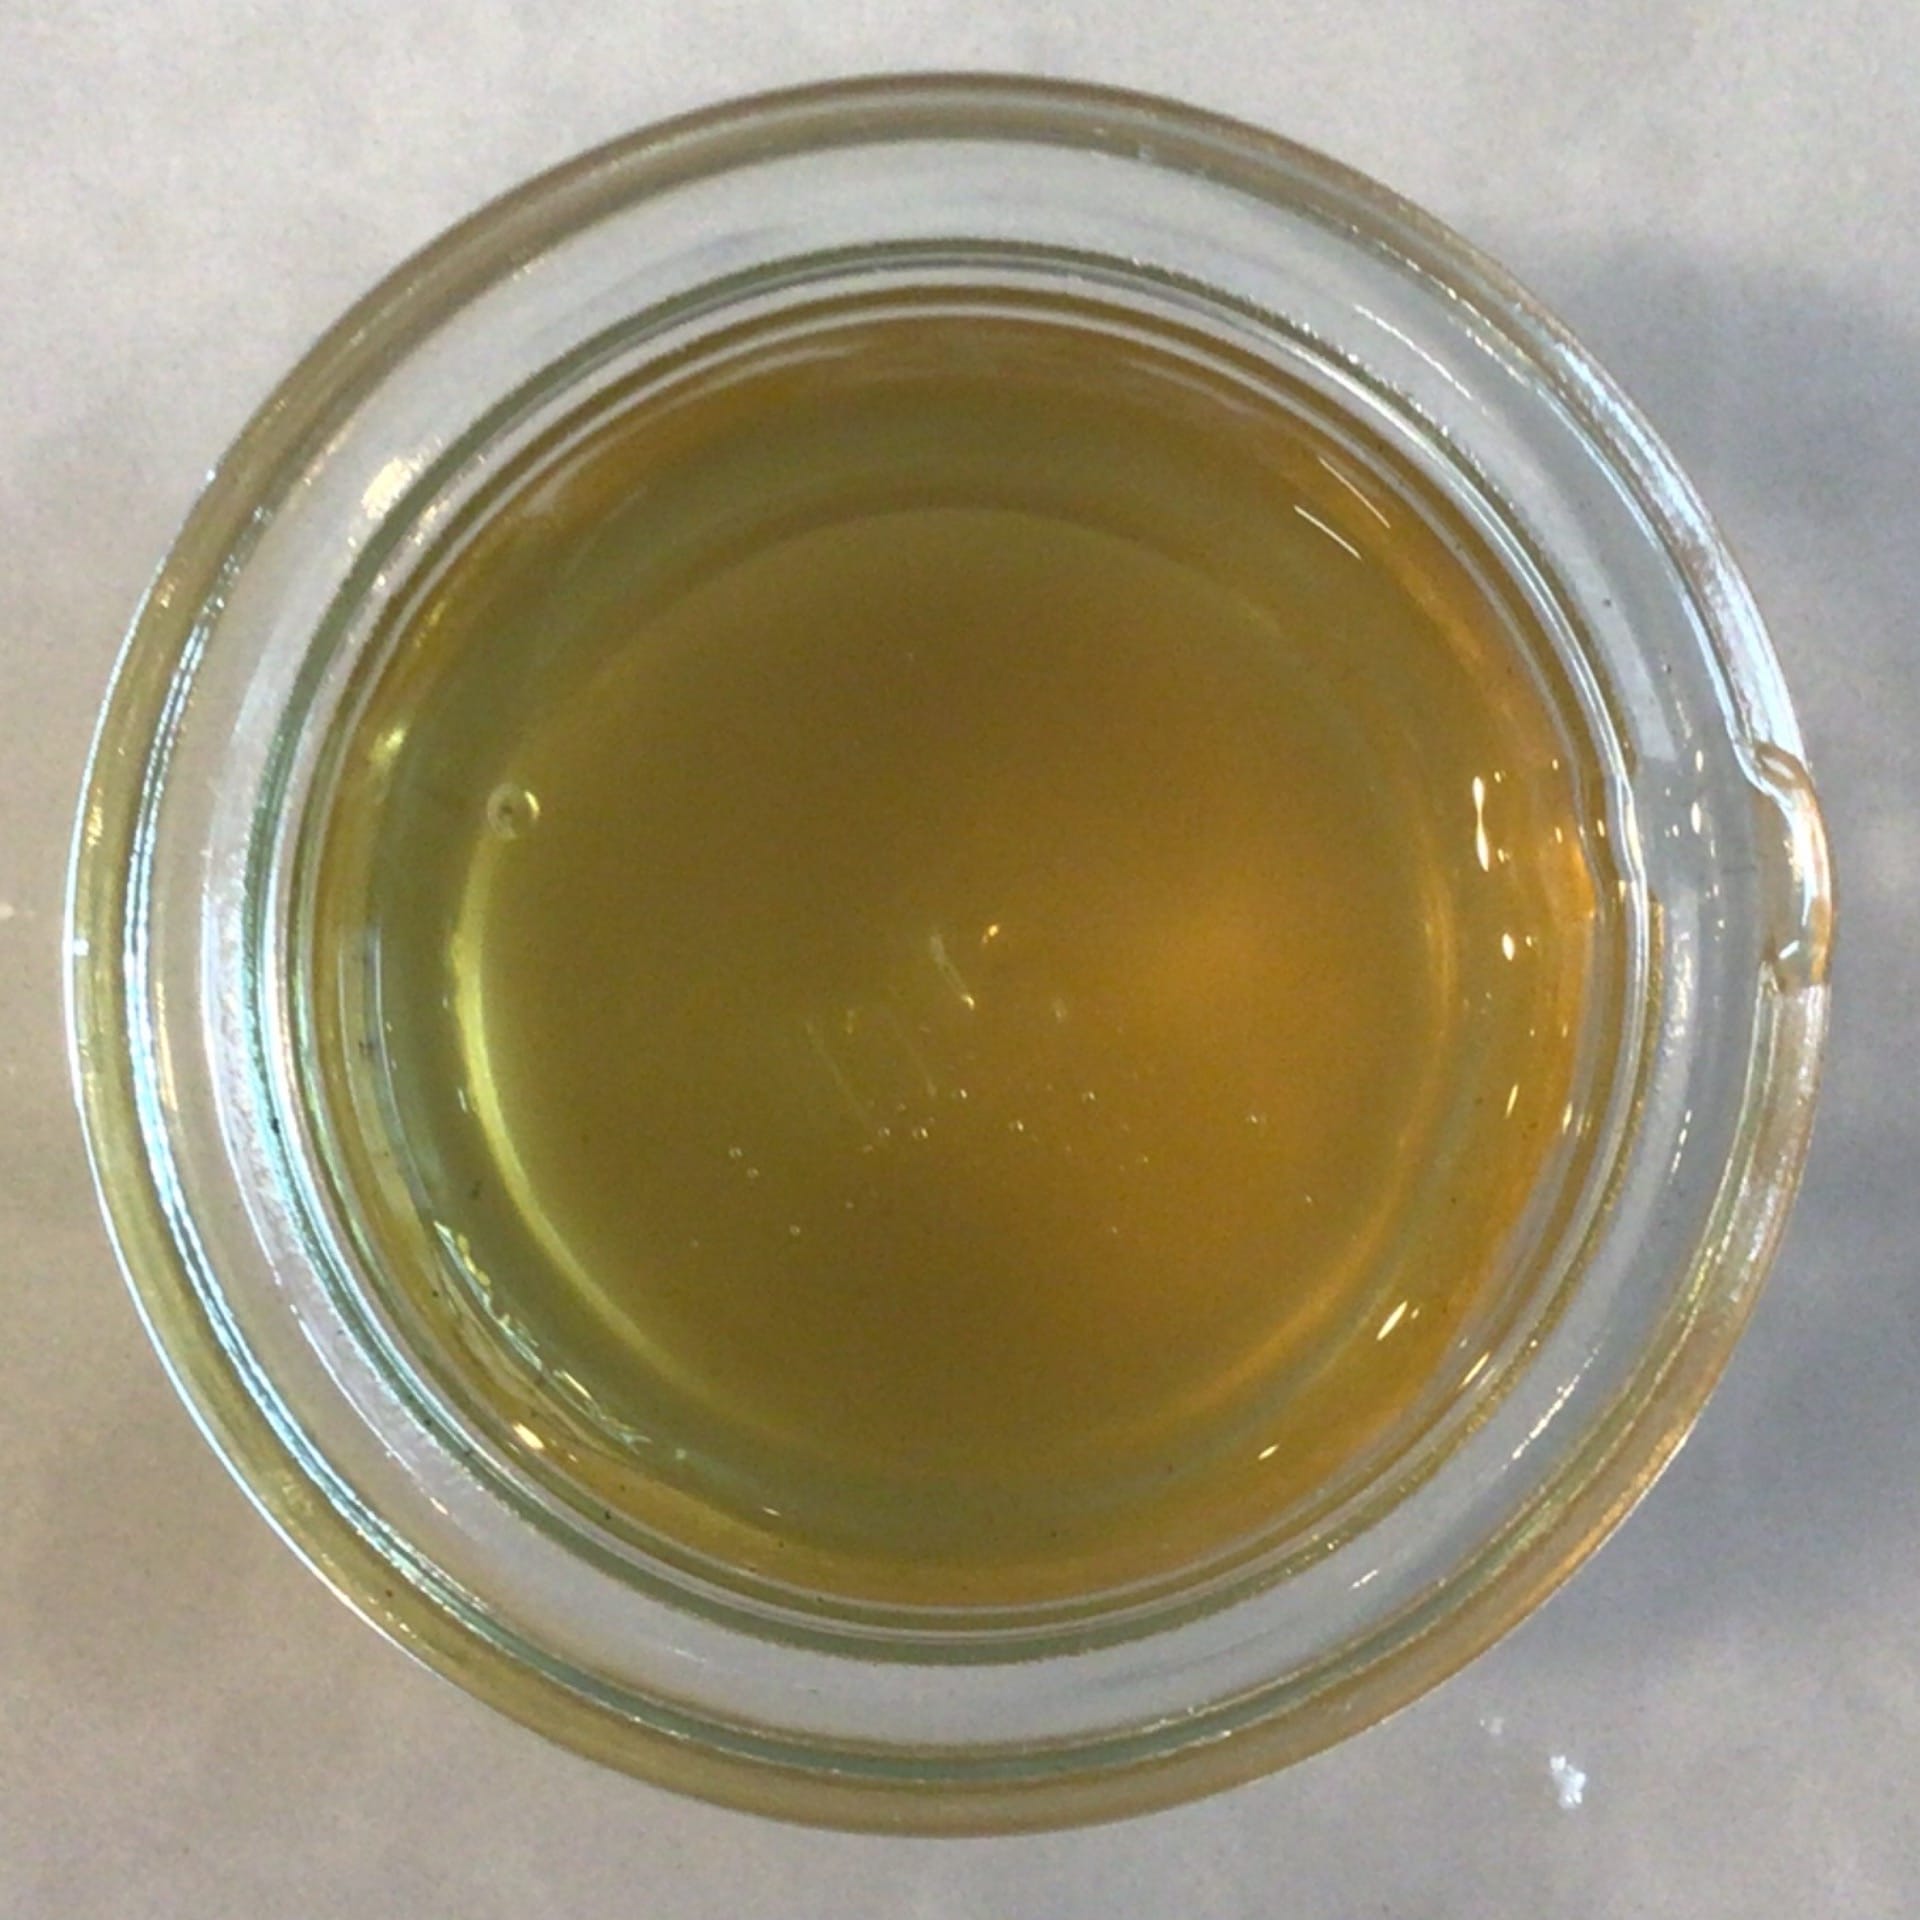 L6 - Washing Soda (Sodium Carbonate) - exist green